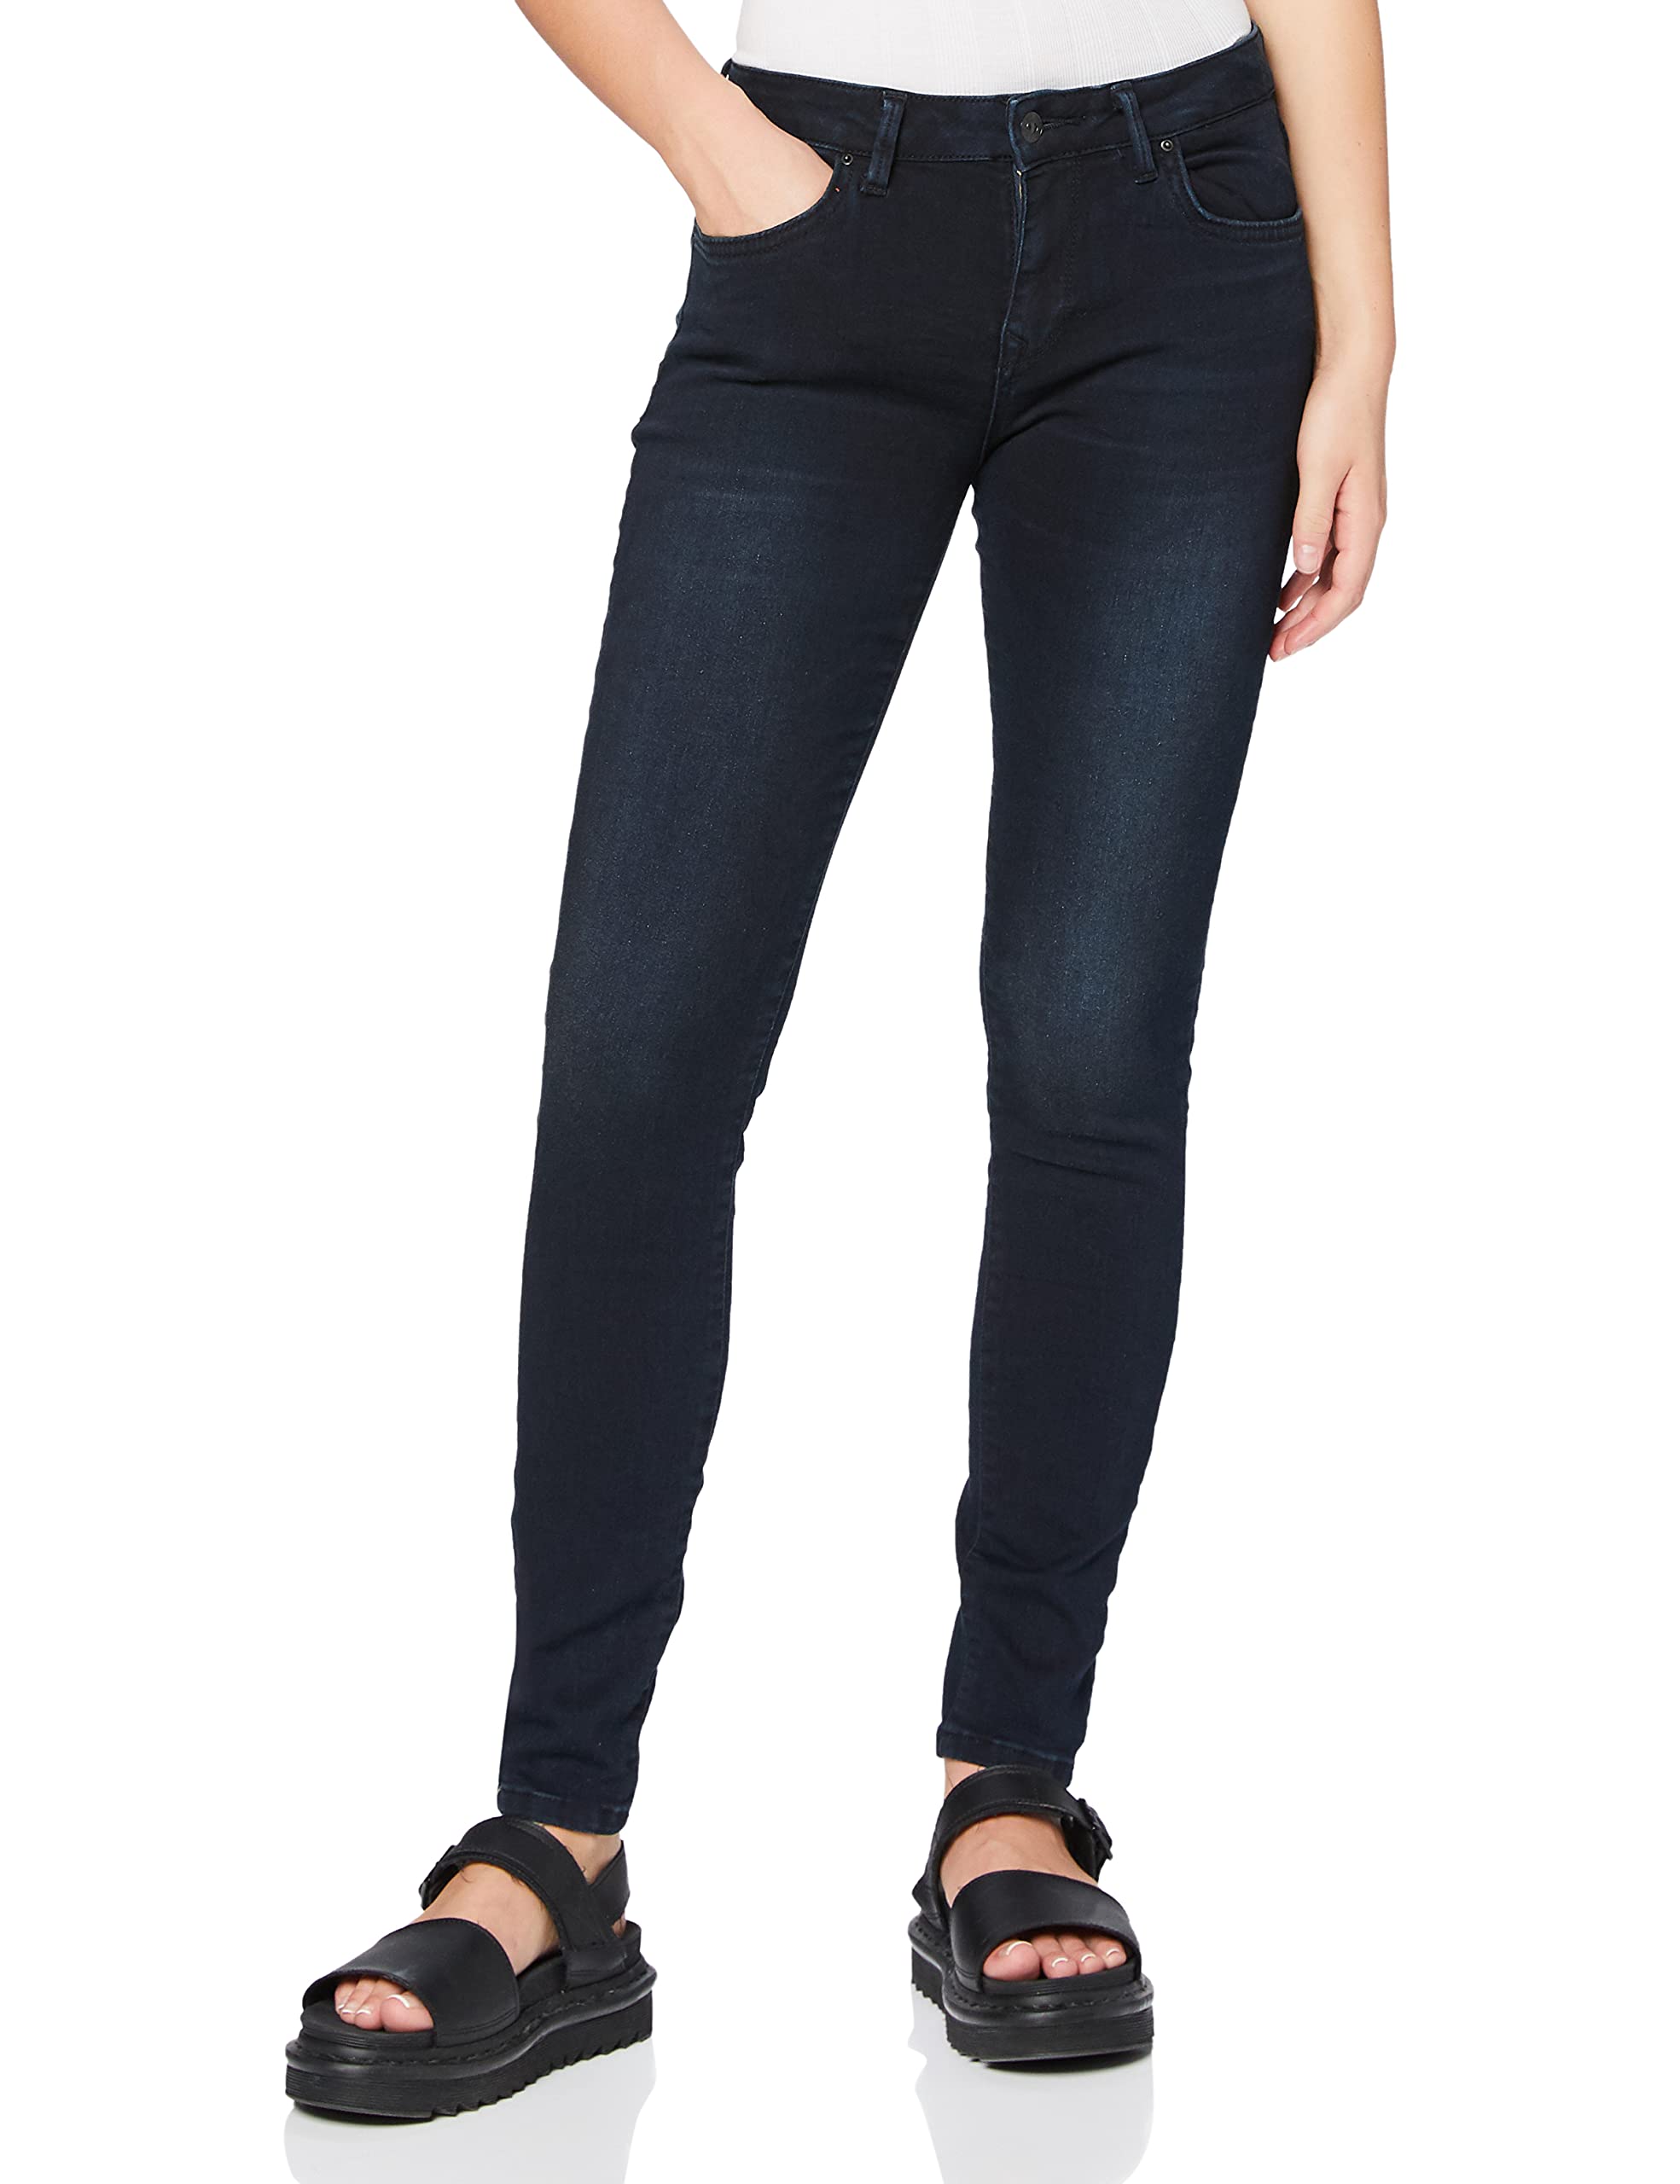 LTB Jeans Damen Nicole Skinny Jeans, Blau (Parvin Wash 51272), 29W / 30L EU